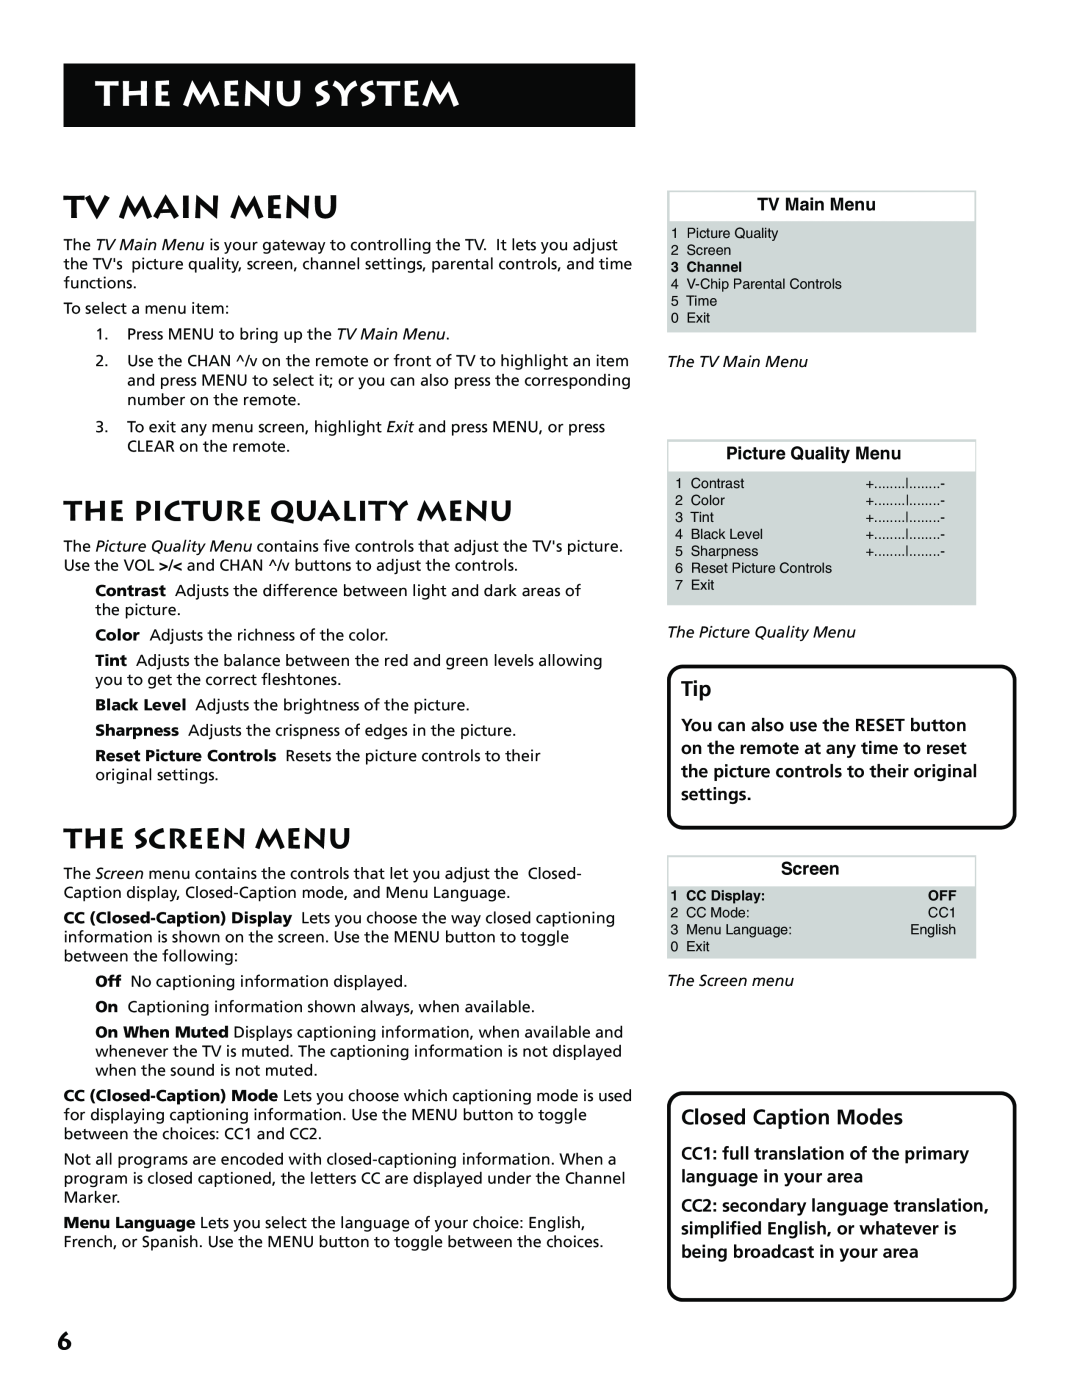 RCA E13341 The Menu System, Tv Main Menu, The Picture Quality Menu, The Screen Menu, Closed Caption Modes, TV Main Menu 